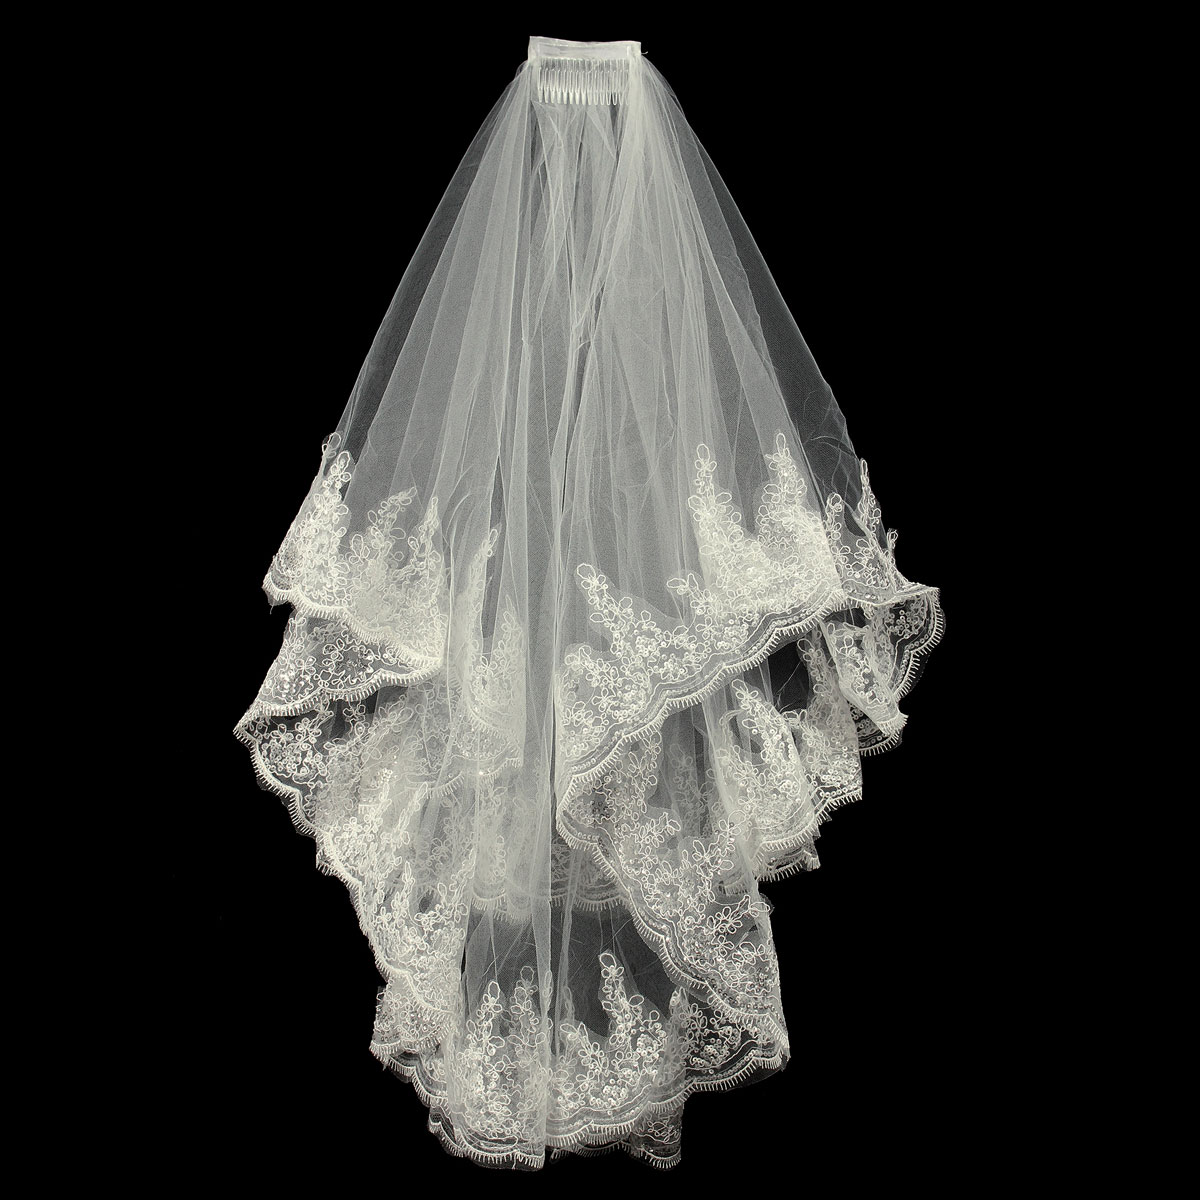 Bride-2-Layers-Lace-Sequin-Decorative-Edge-Bridal-Wedding-Elbow-Veil-With-Comb-1085026